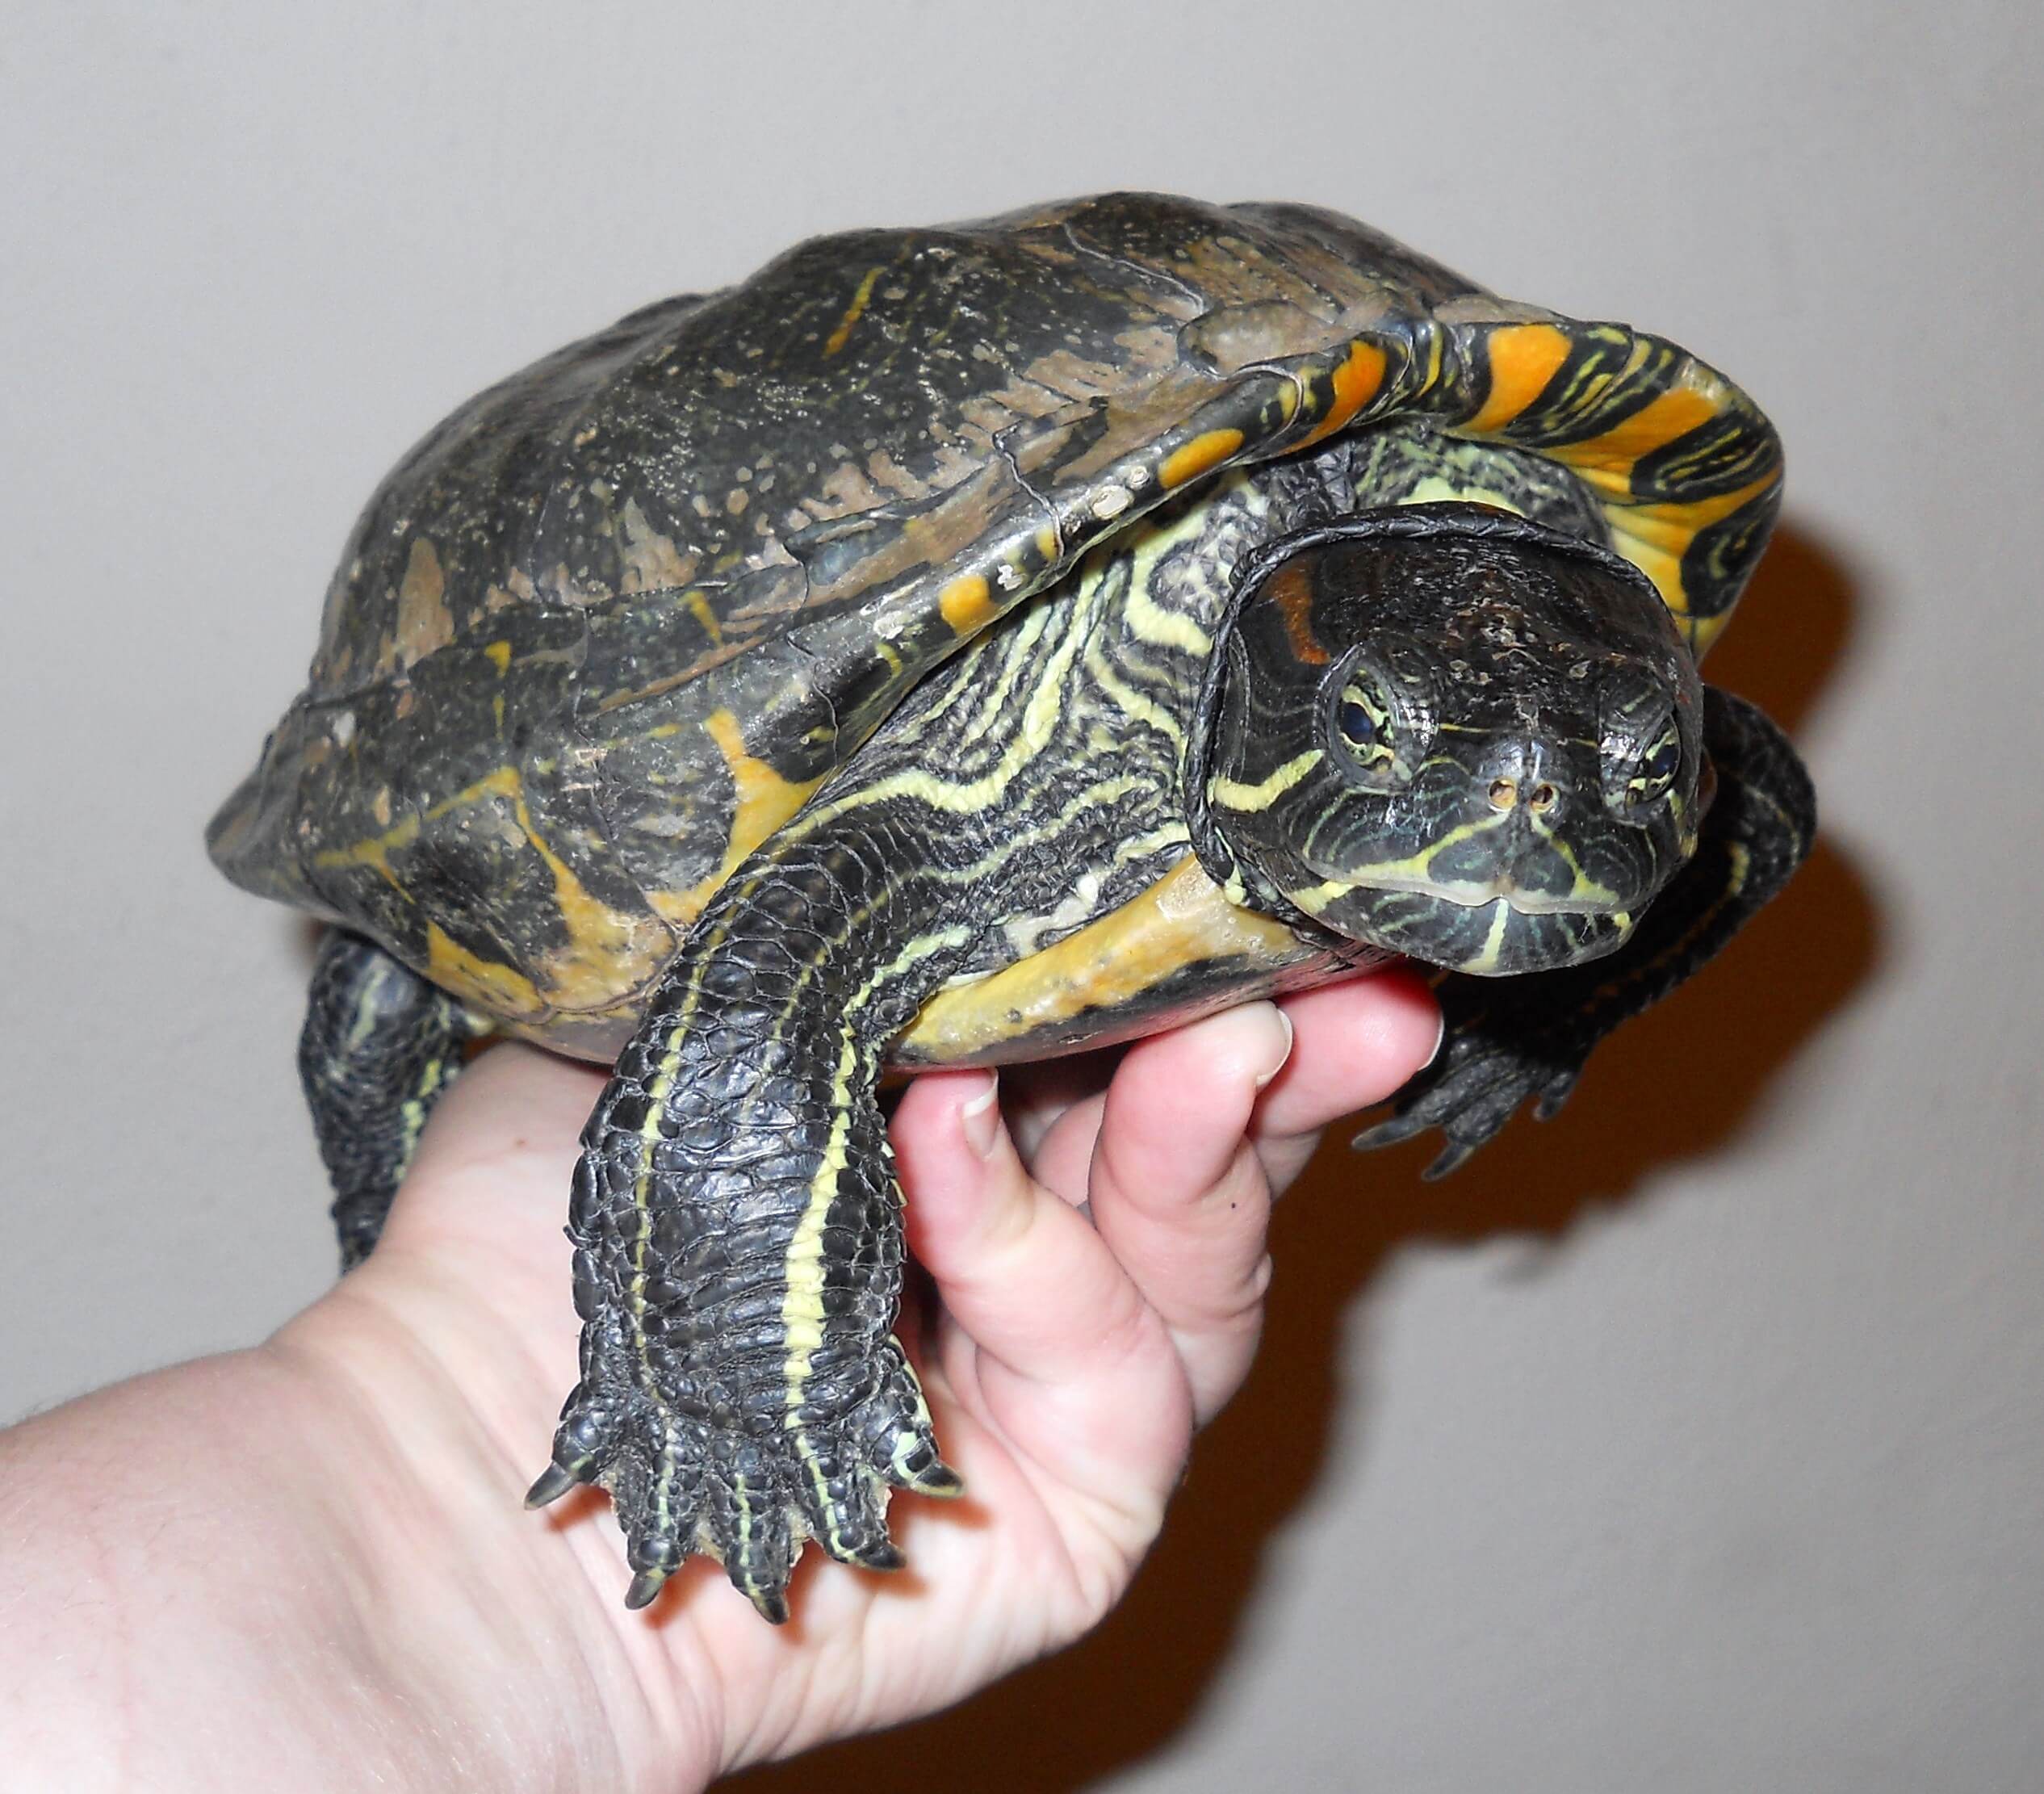 How Pet Turtles Became Popular theTurtleRoom